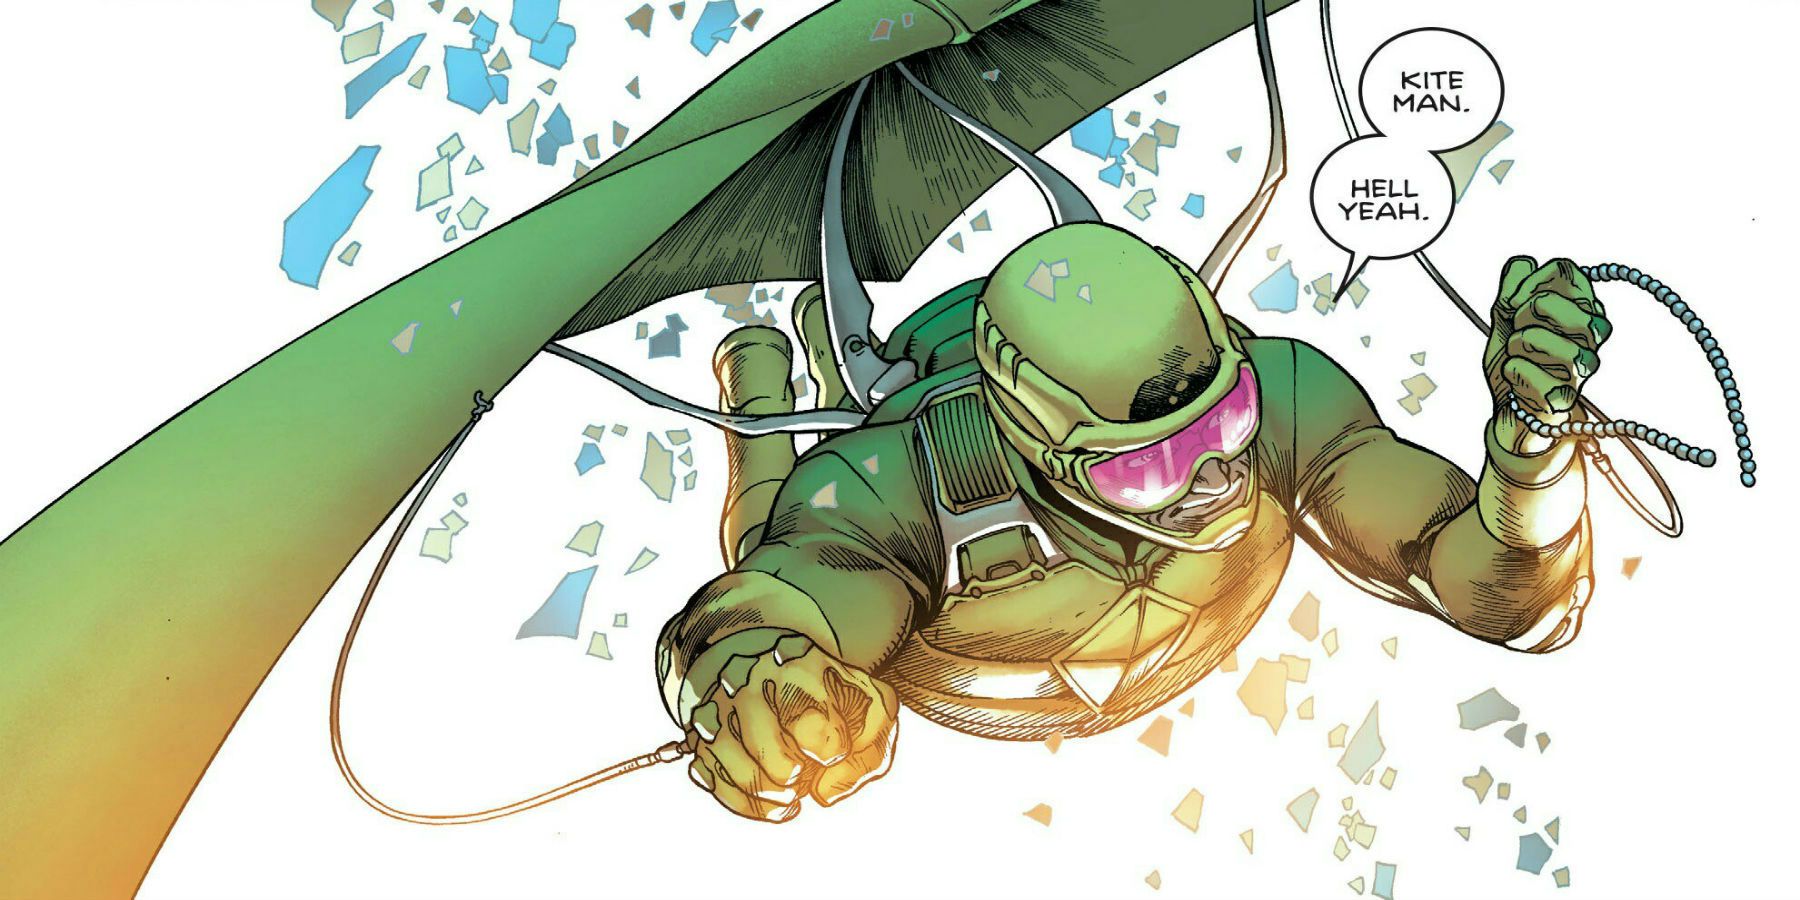 A panel of Kite Man from Batman comics